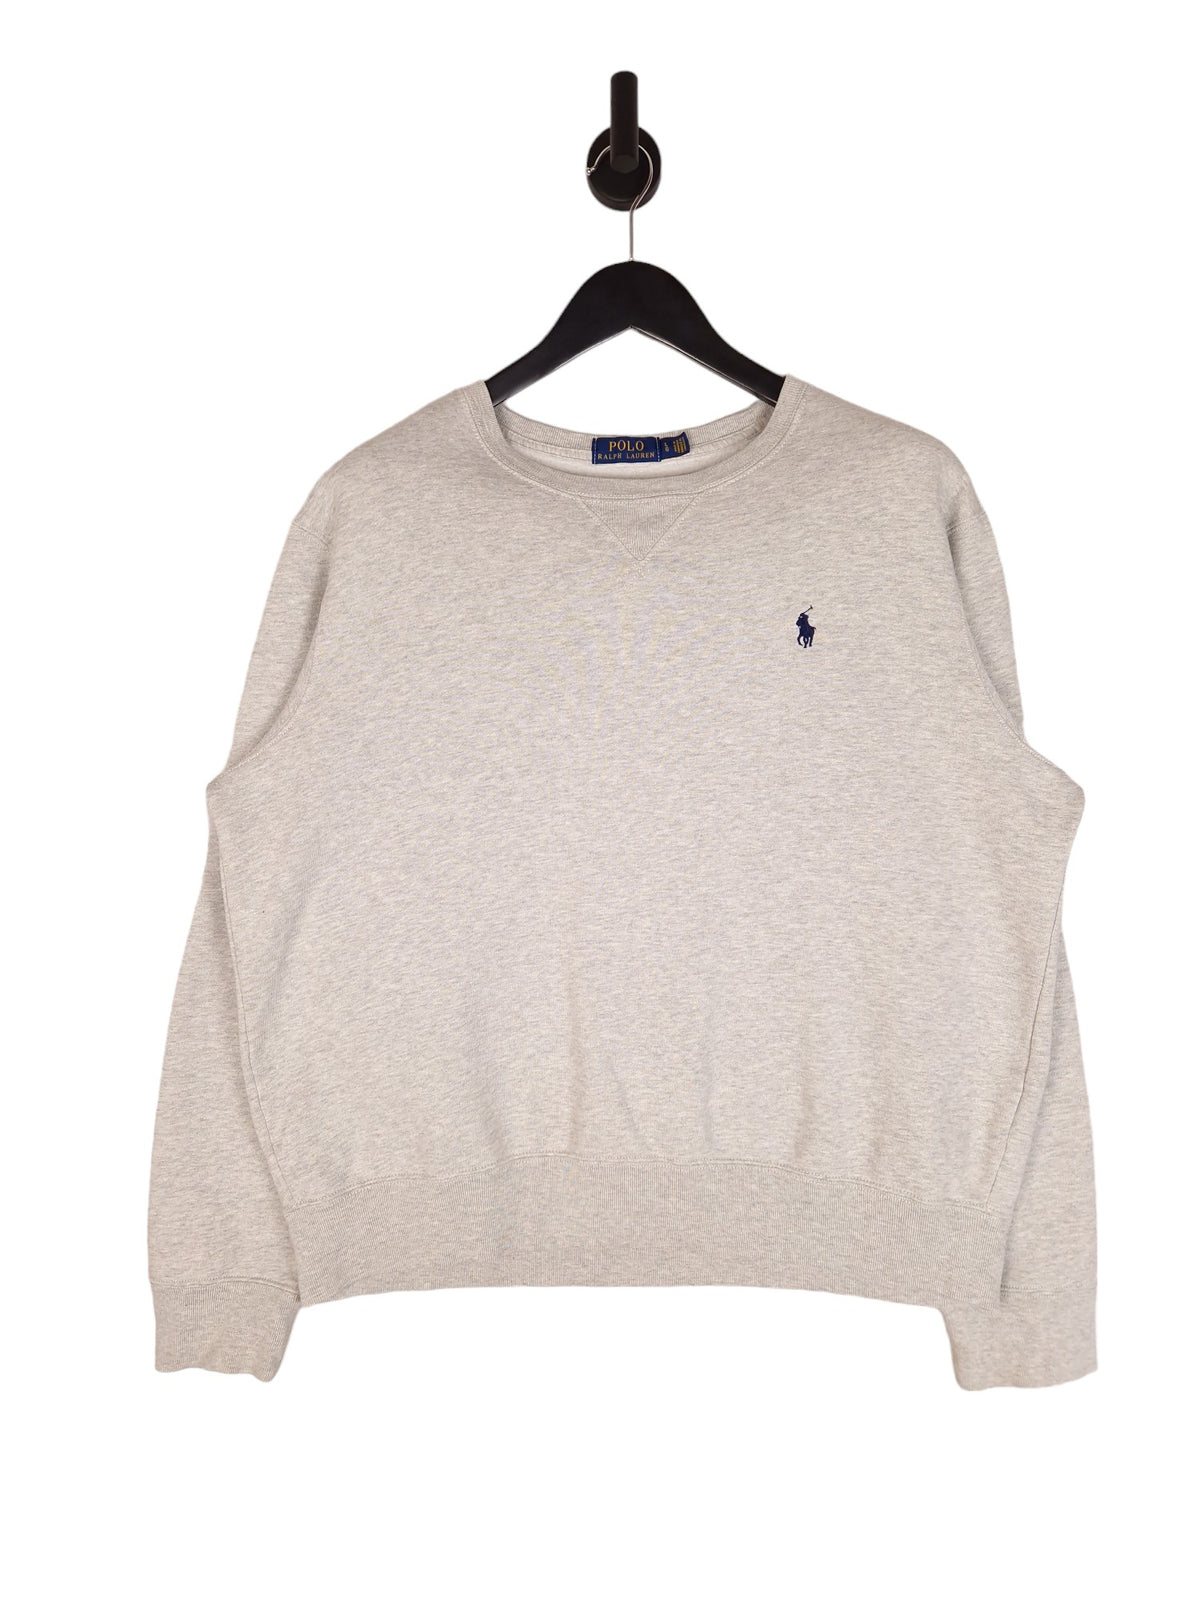 Polo Ralph Lauren Sweatshirt - Size Large